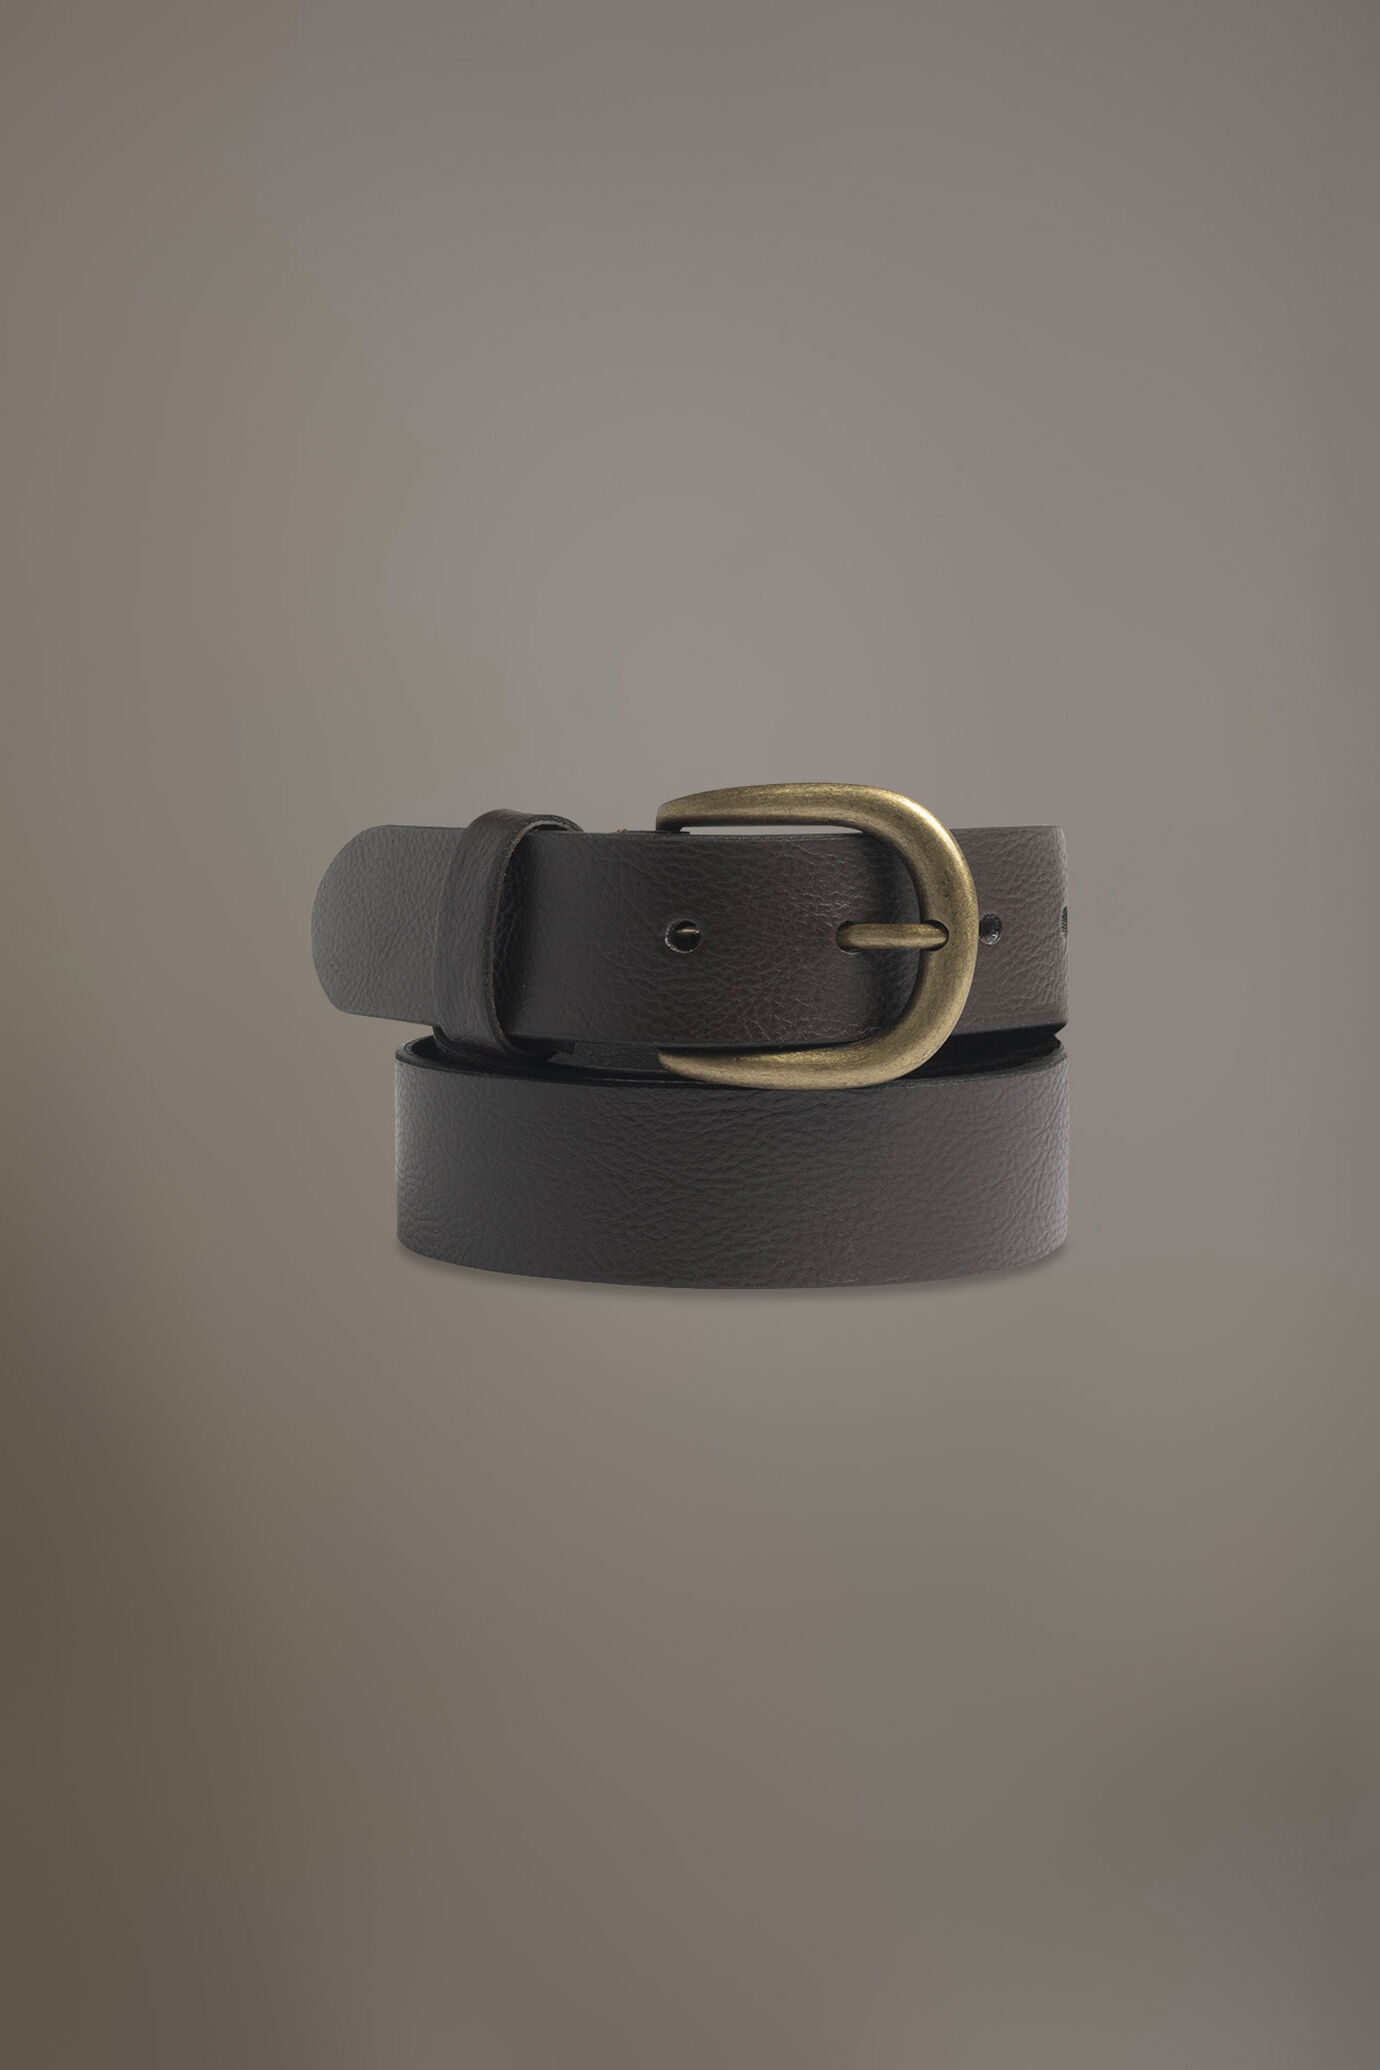 Cintura rivestita in pelle martellata made in Italy